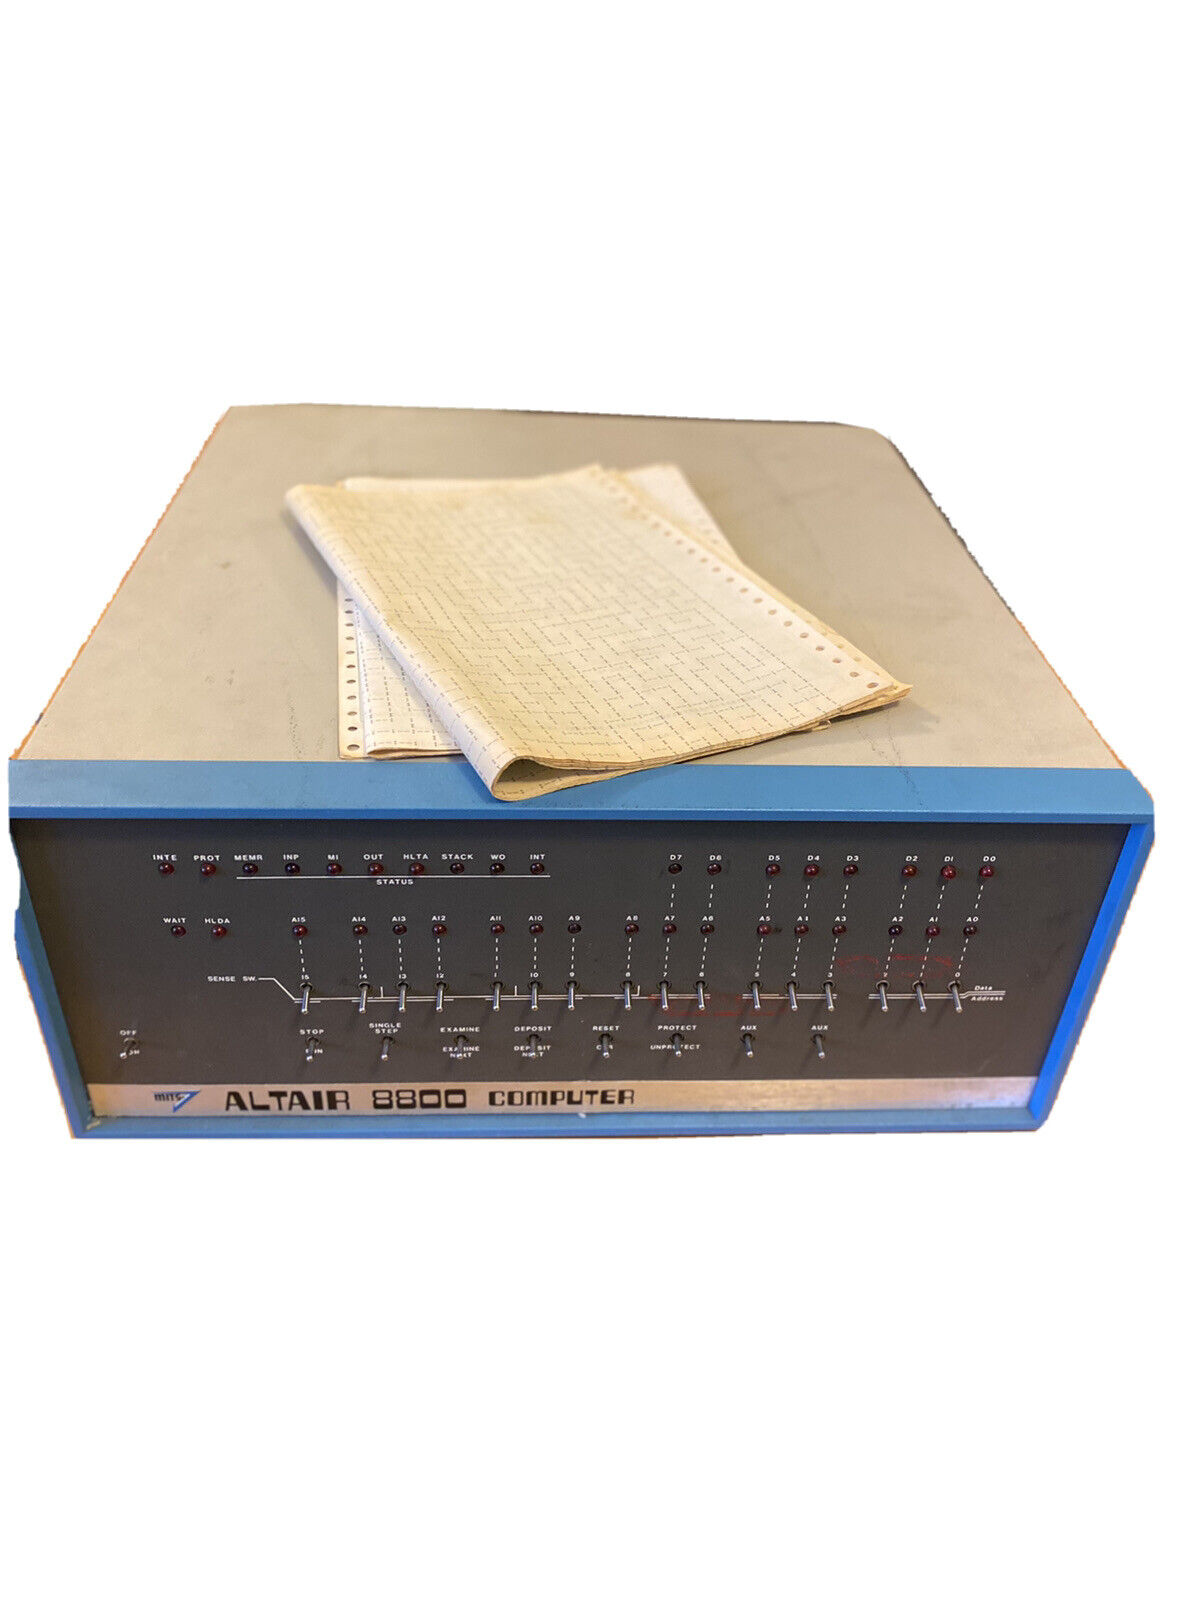 Vintage RARE Altair 8800 Computer *Good Condition*